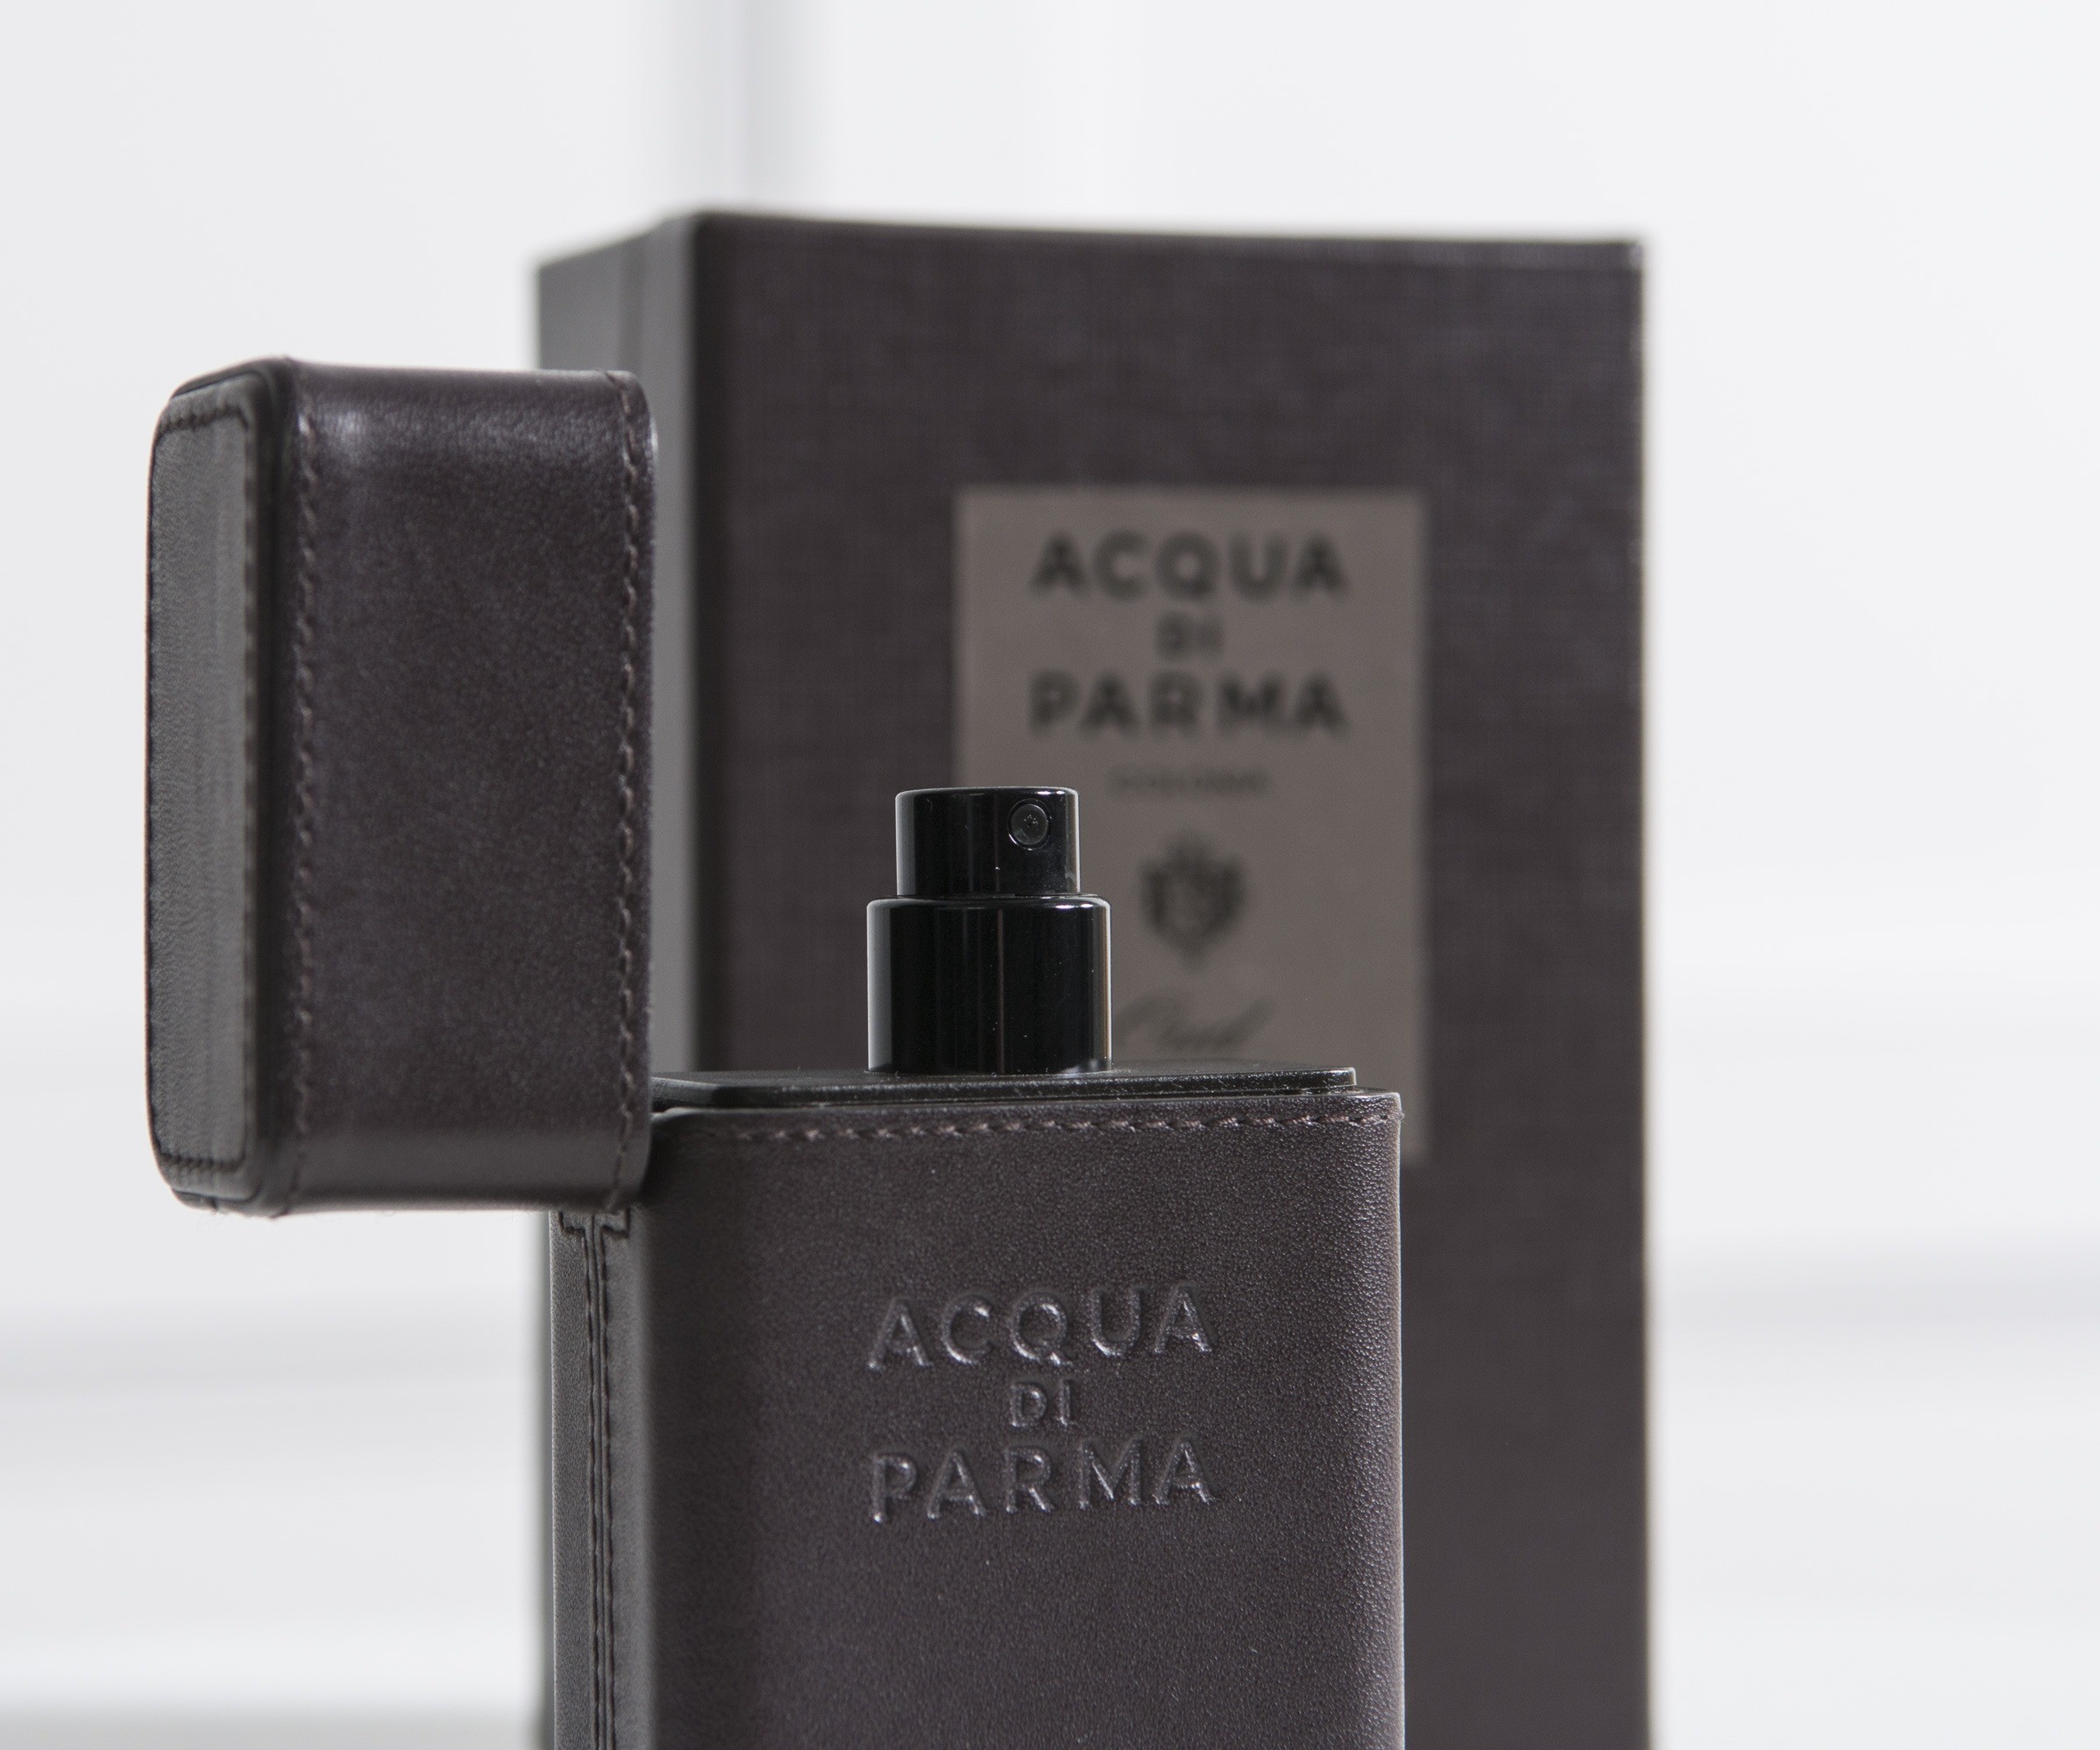 Colonia Club Leather Travel Spray by Acqua di Parma ❤️ Buy